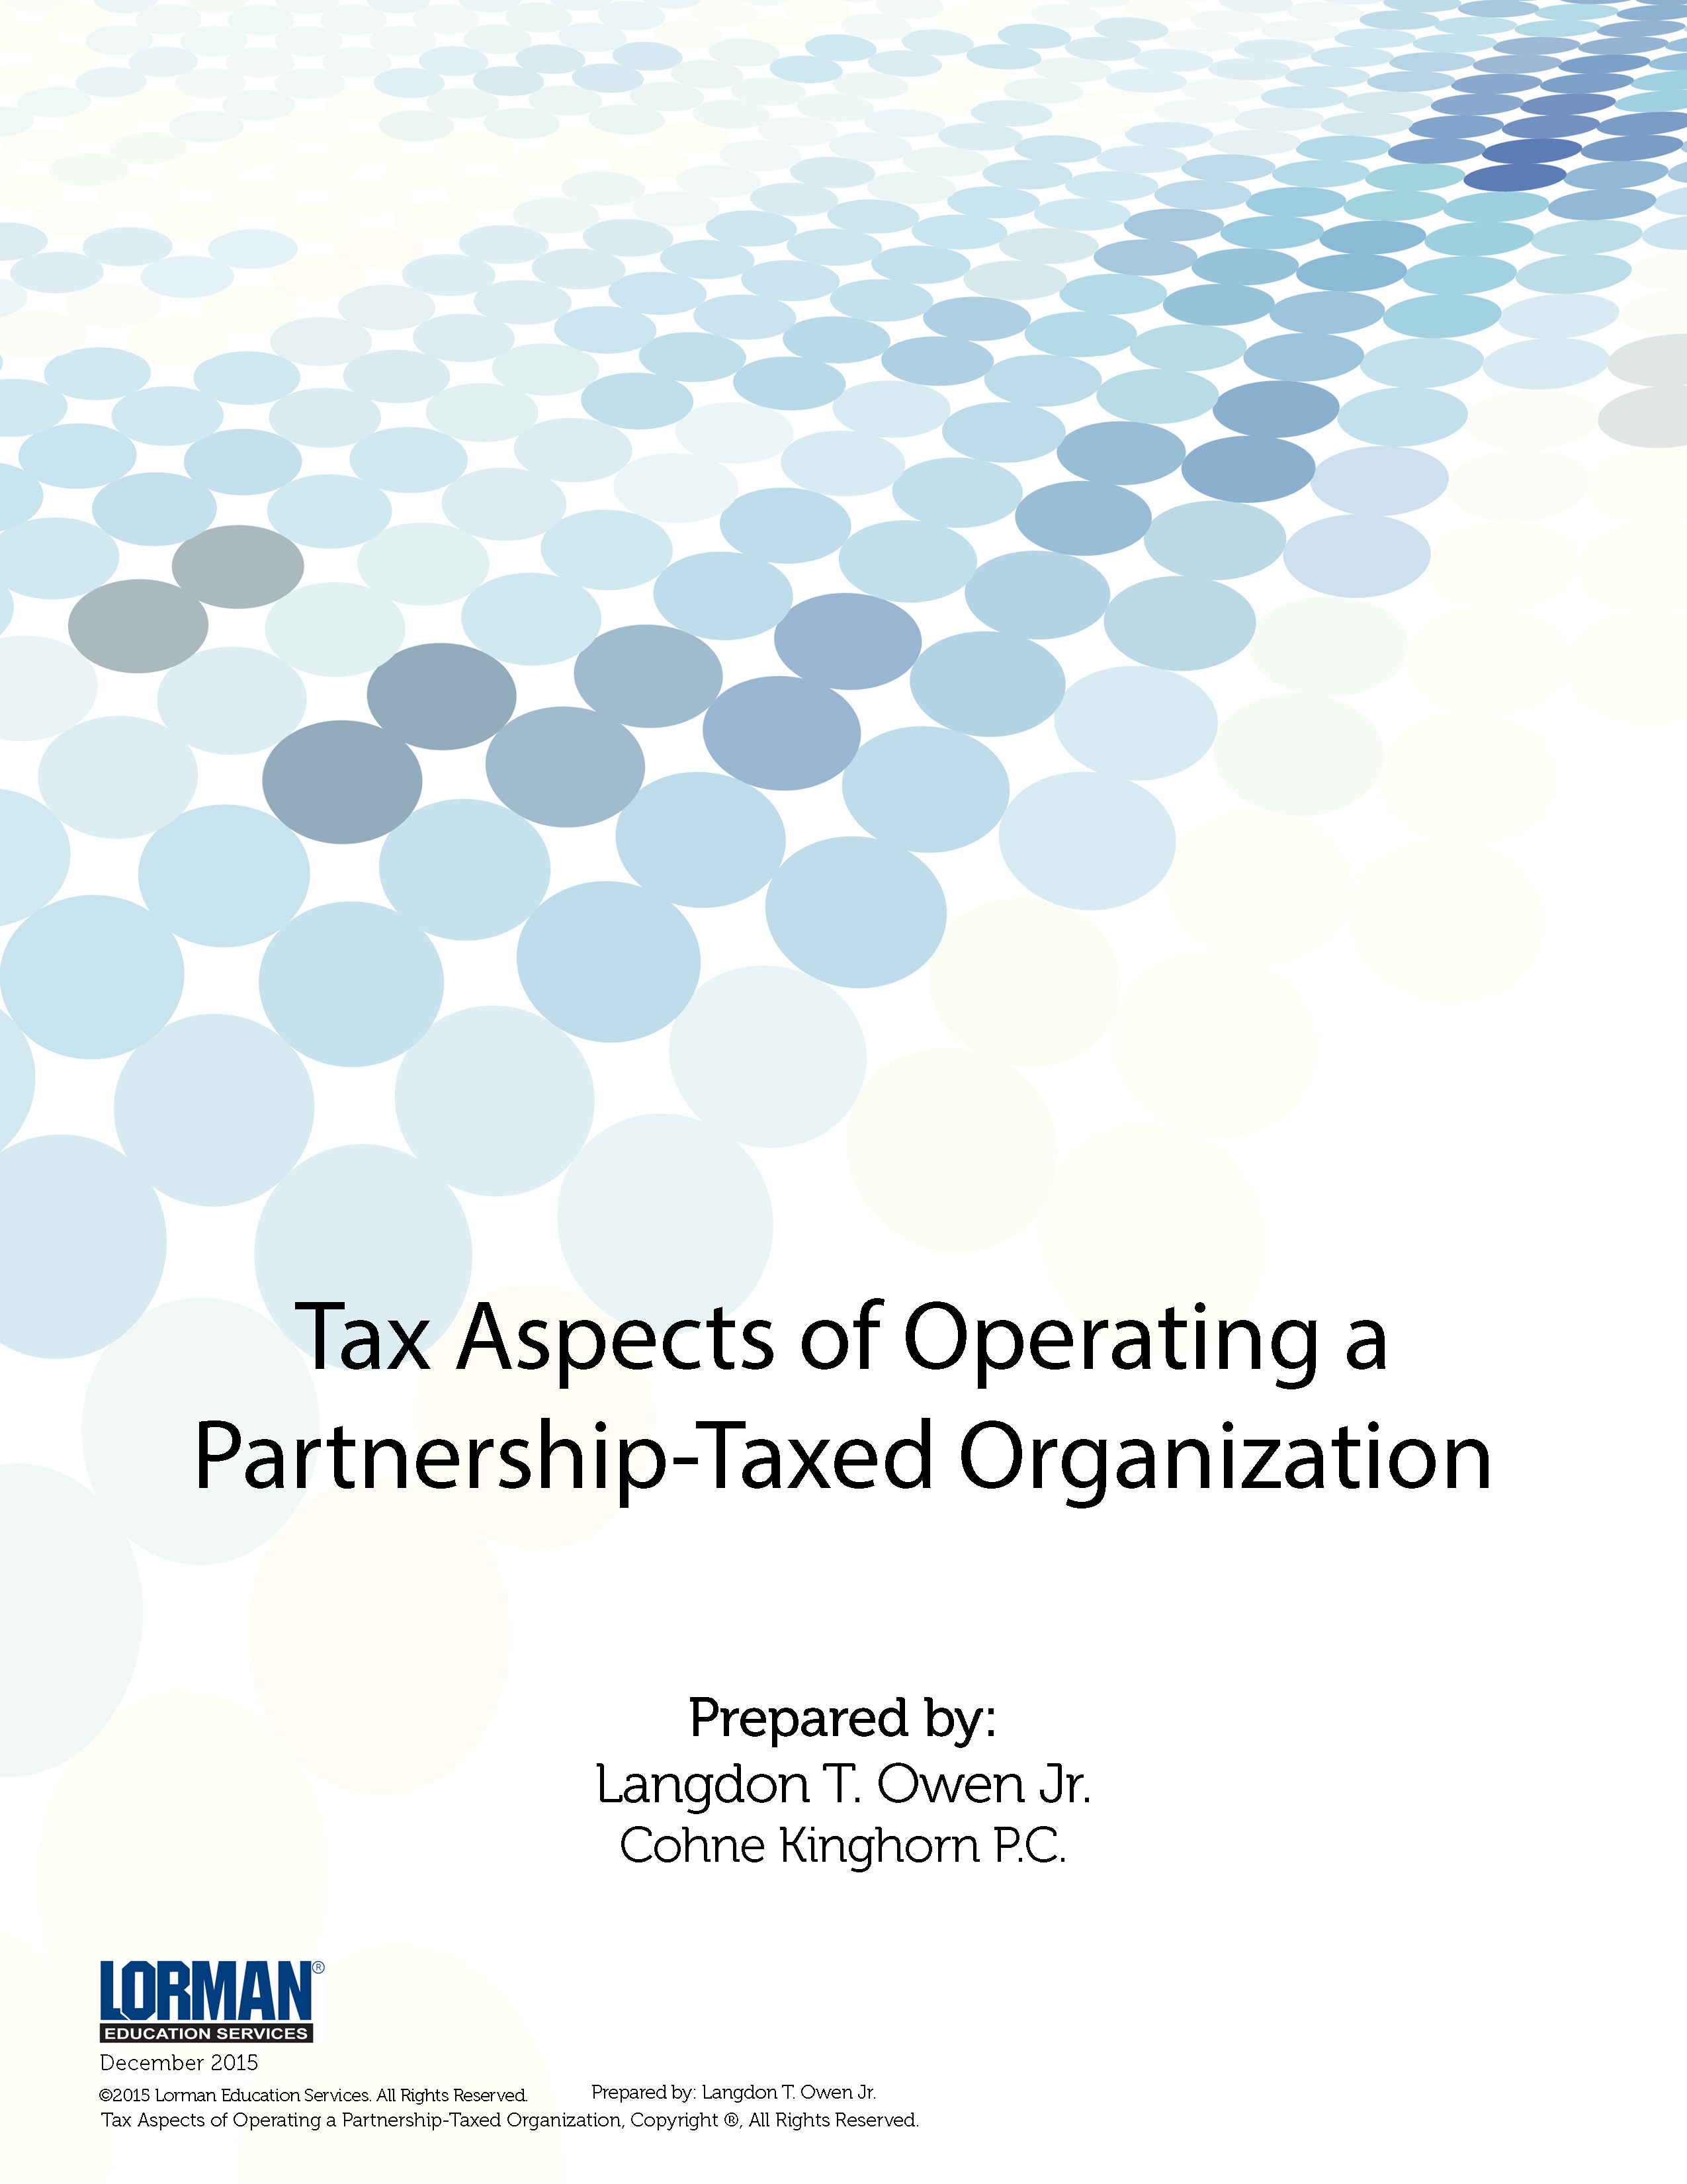 Tax Aspects of Operating a Partnership-Taxed Organization